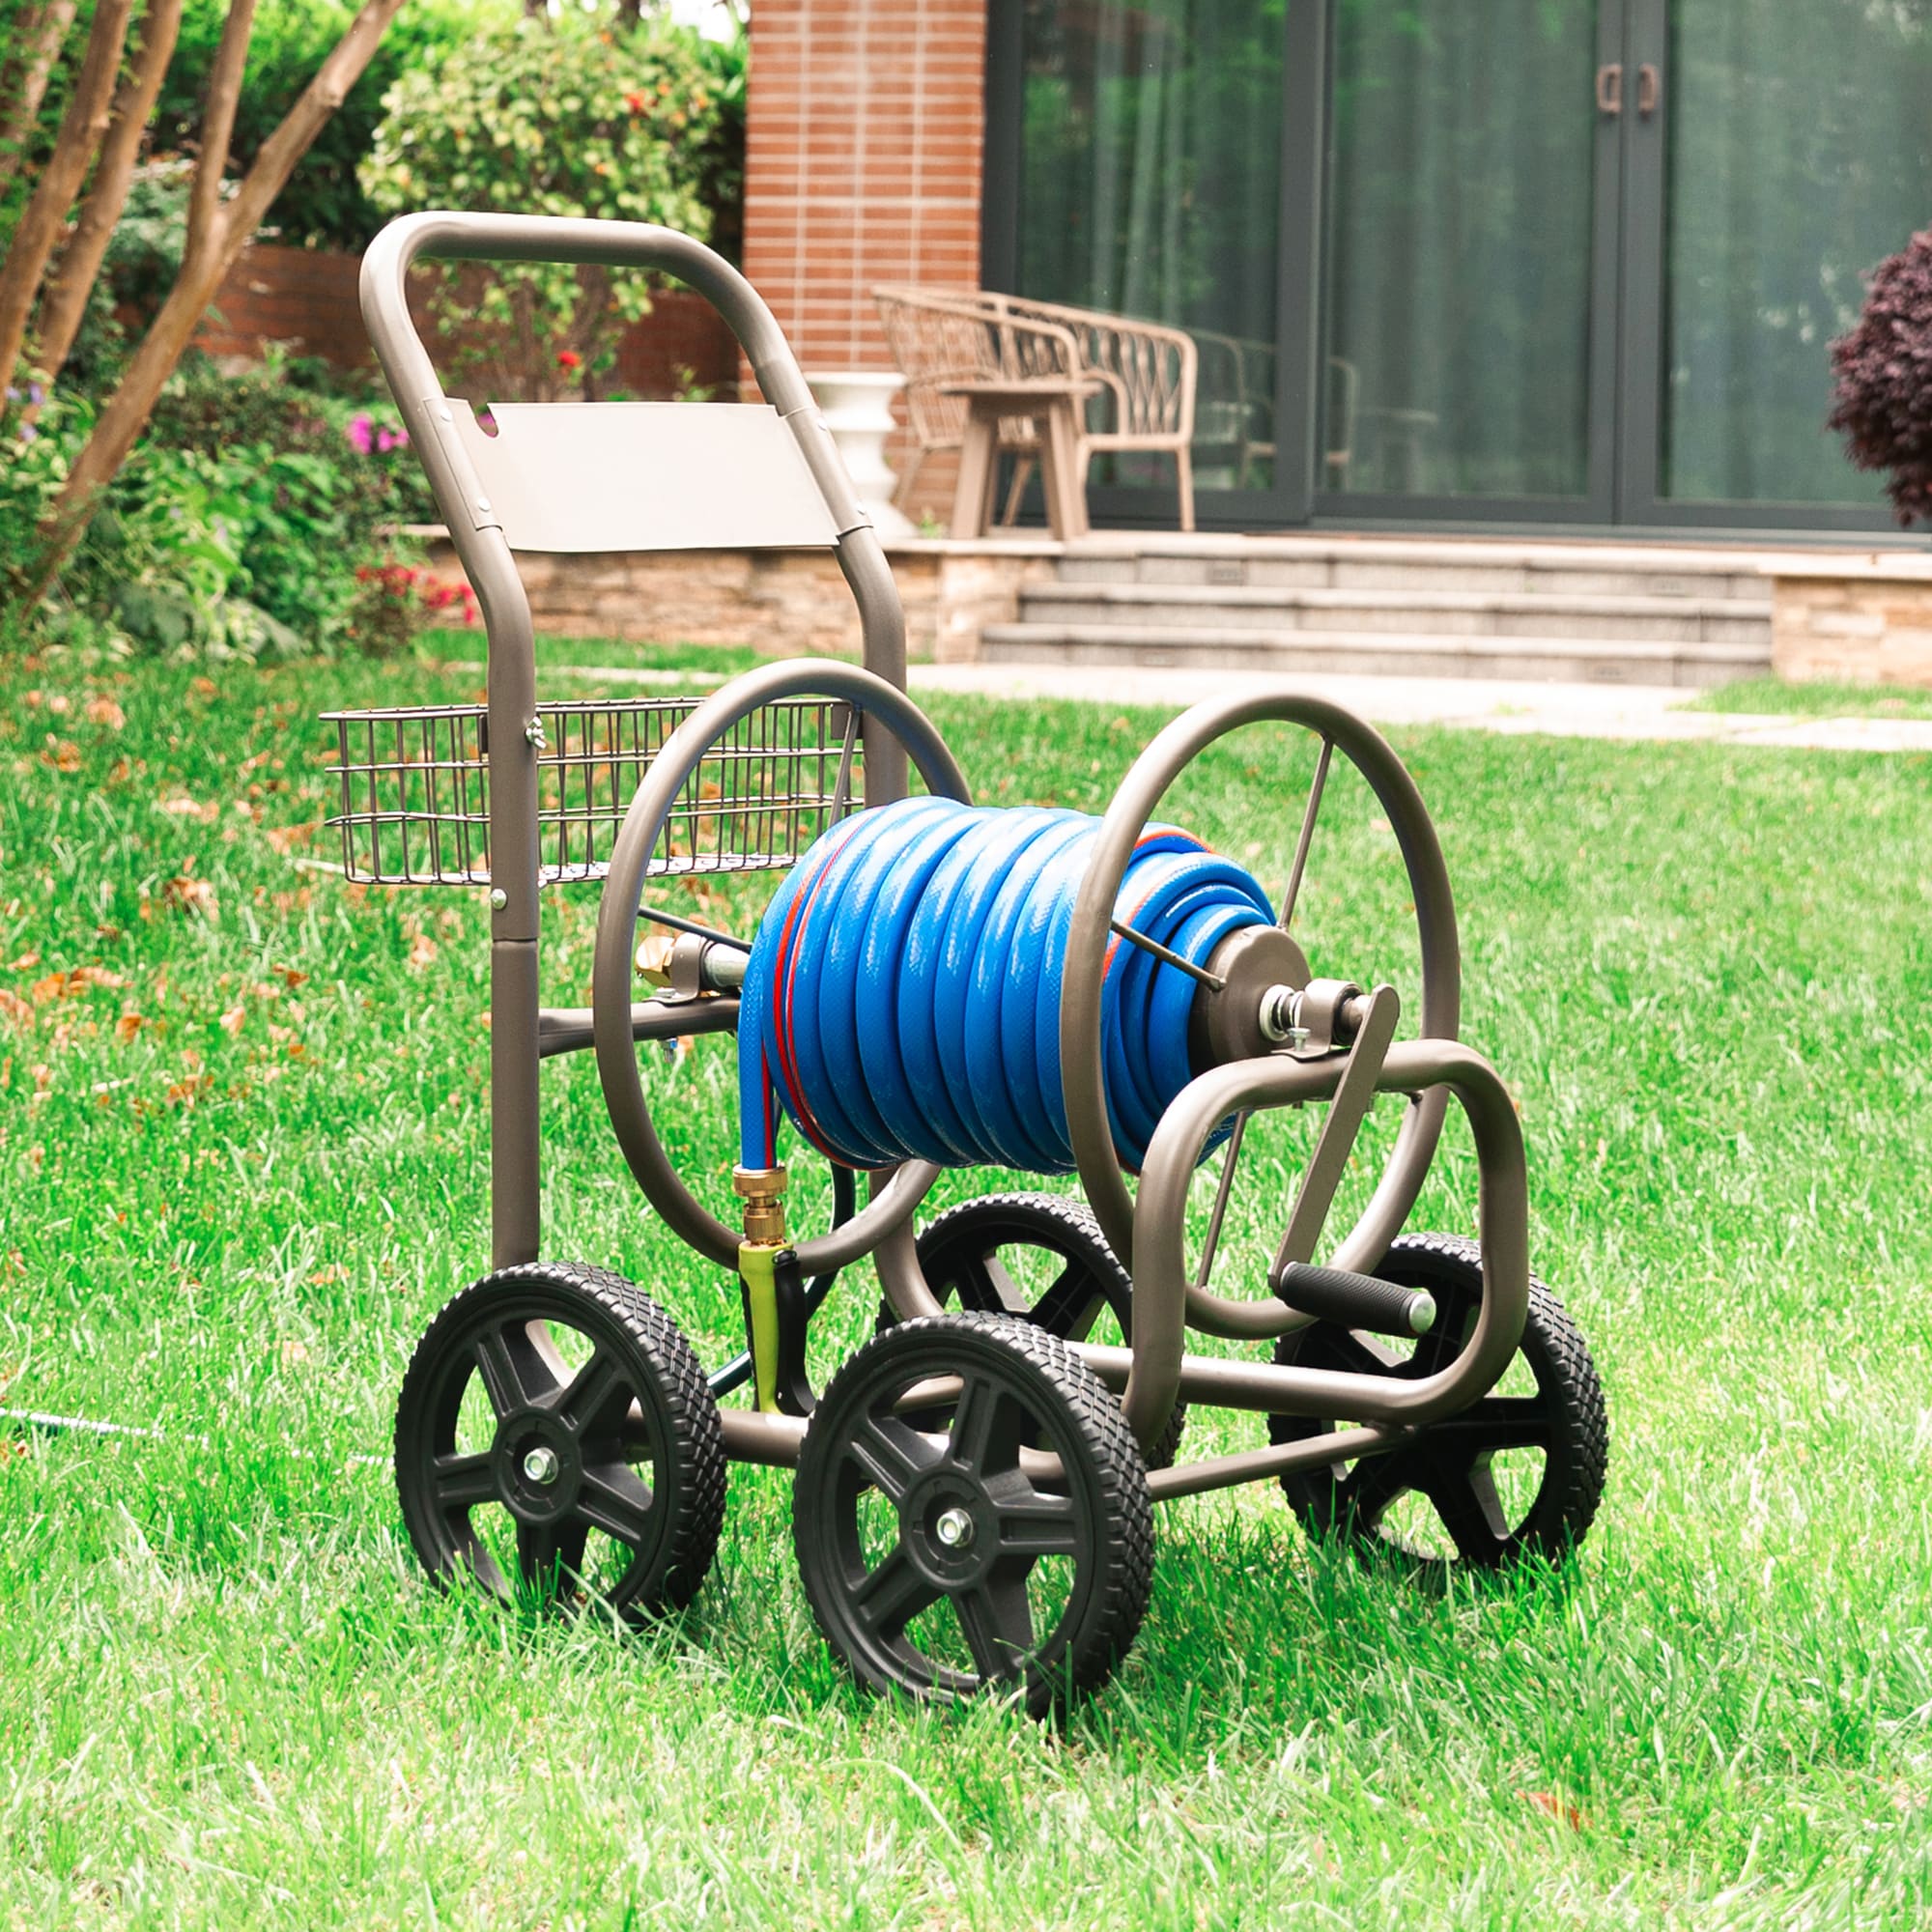 Utility canvas hose reel for Gardens & Irrigation 